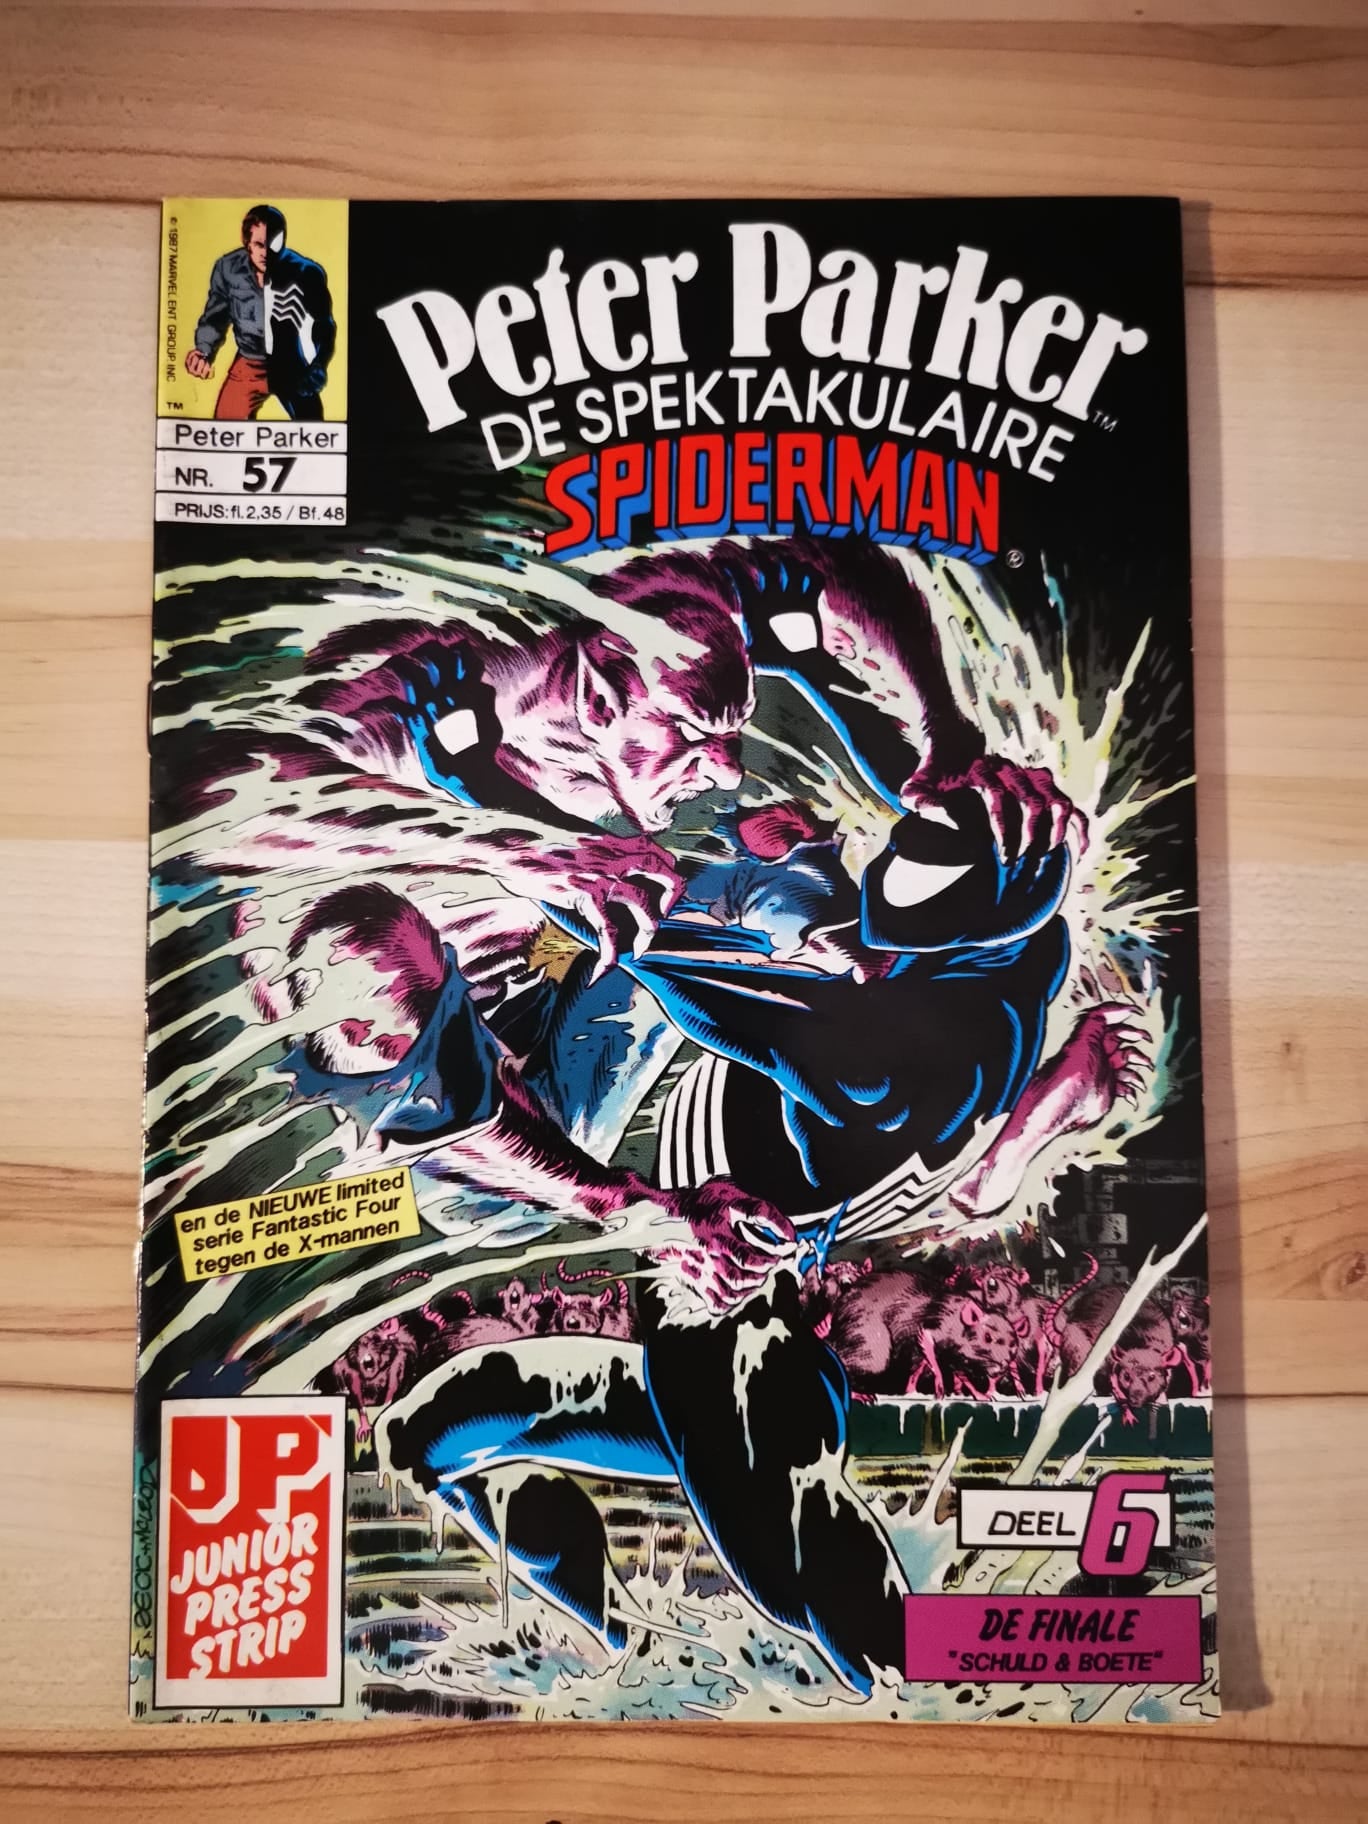 Peter Parker De spektakulaire spiderman #57